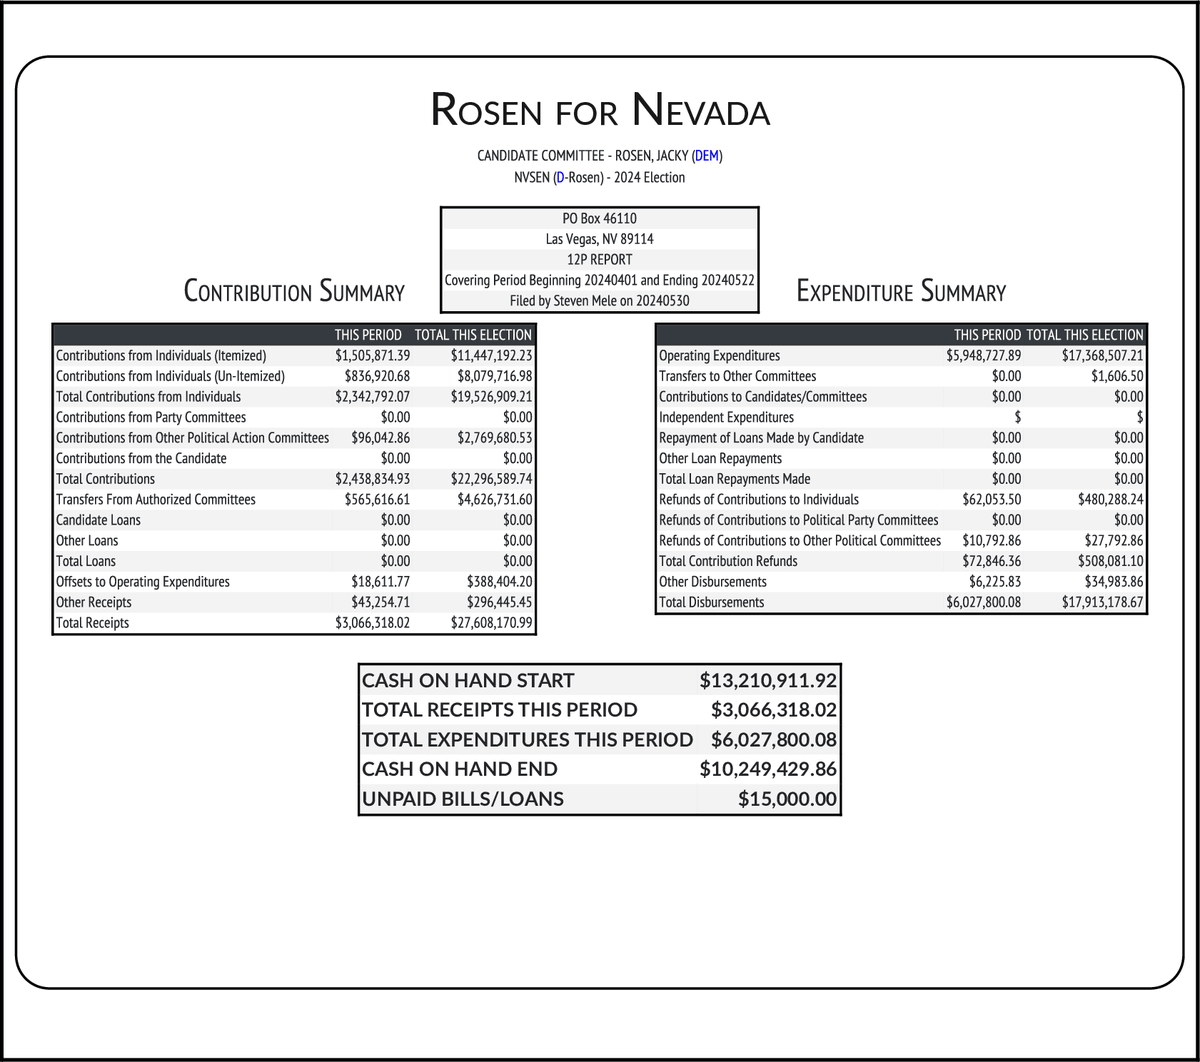 NEW FEC F3 ROSEN, JACKY (DEM-Inc) #NVSEN RCPT $3,066,318 EXPN $6,027,800 COH $10,249,430 docquery.fec.gov/cgi-bin/forms/…